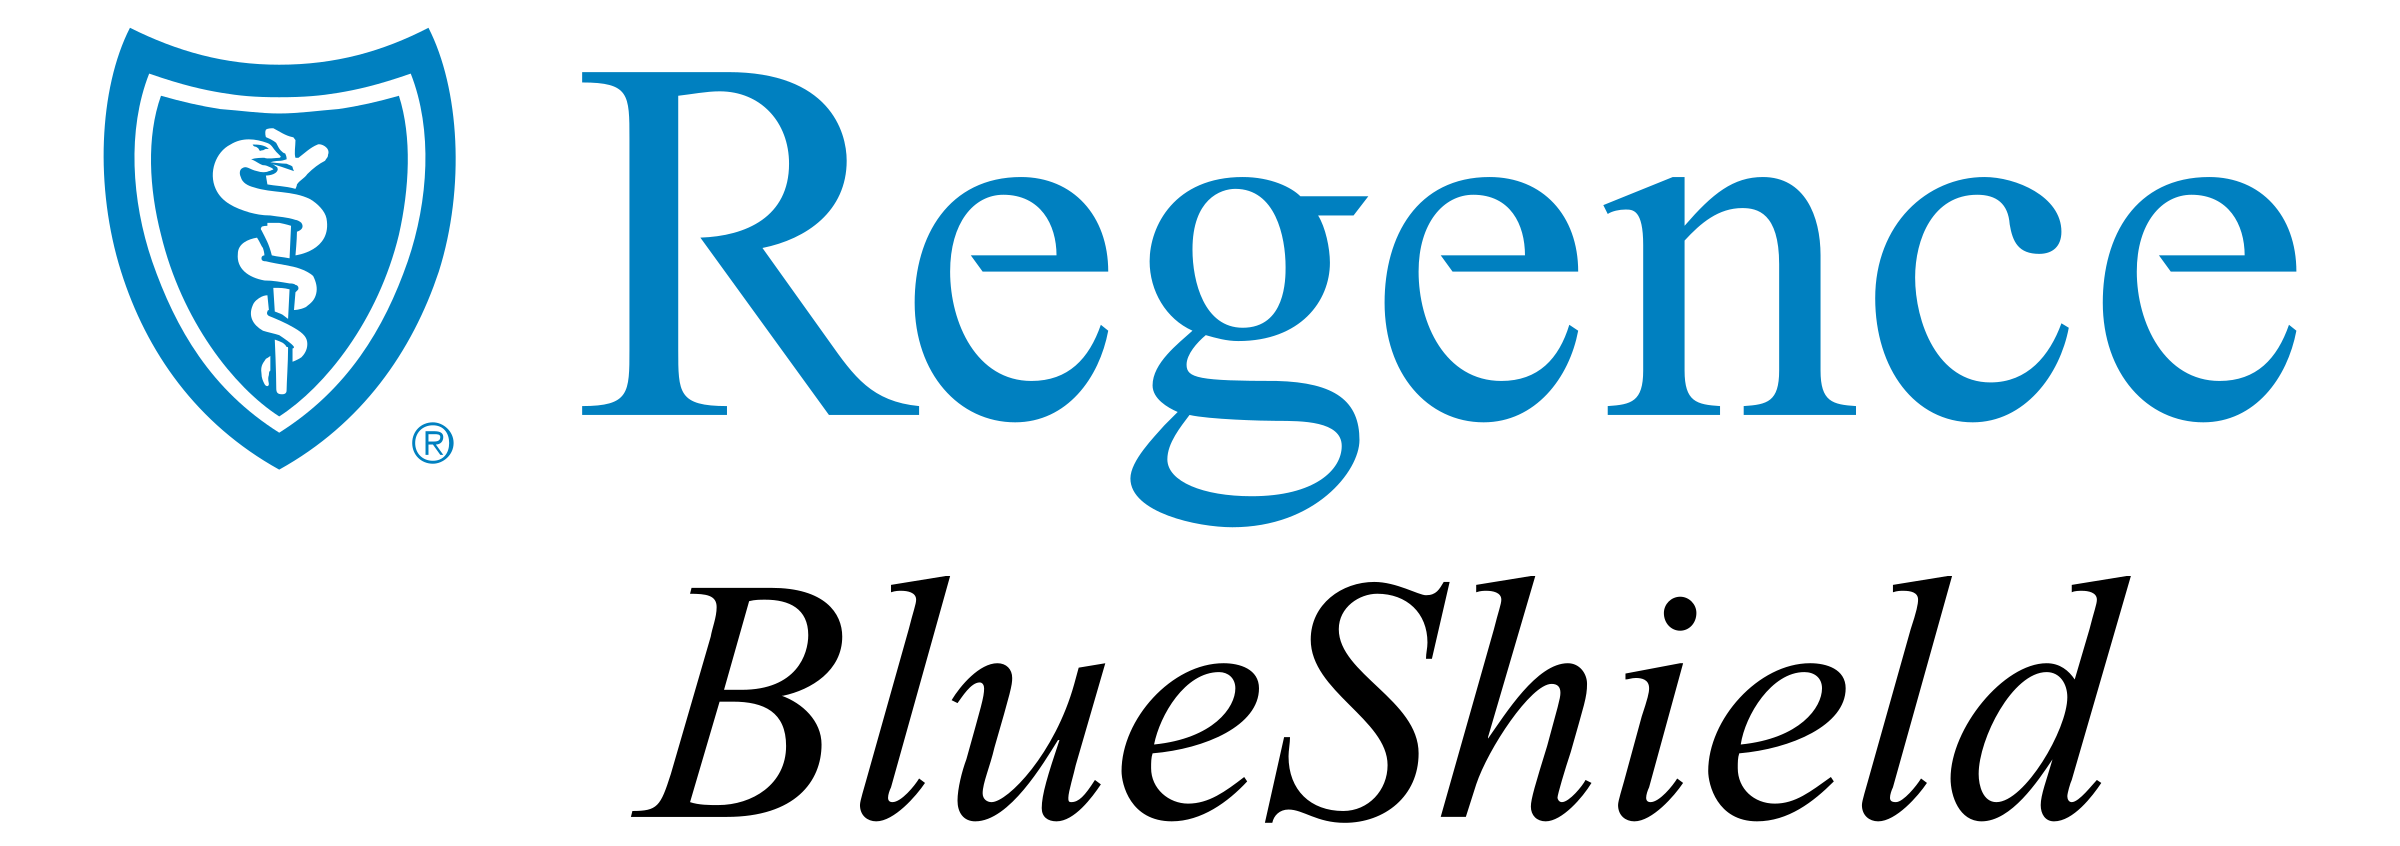 regence-blueshield-logo-png-transparent